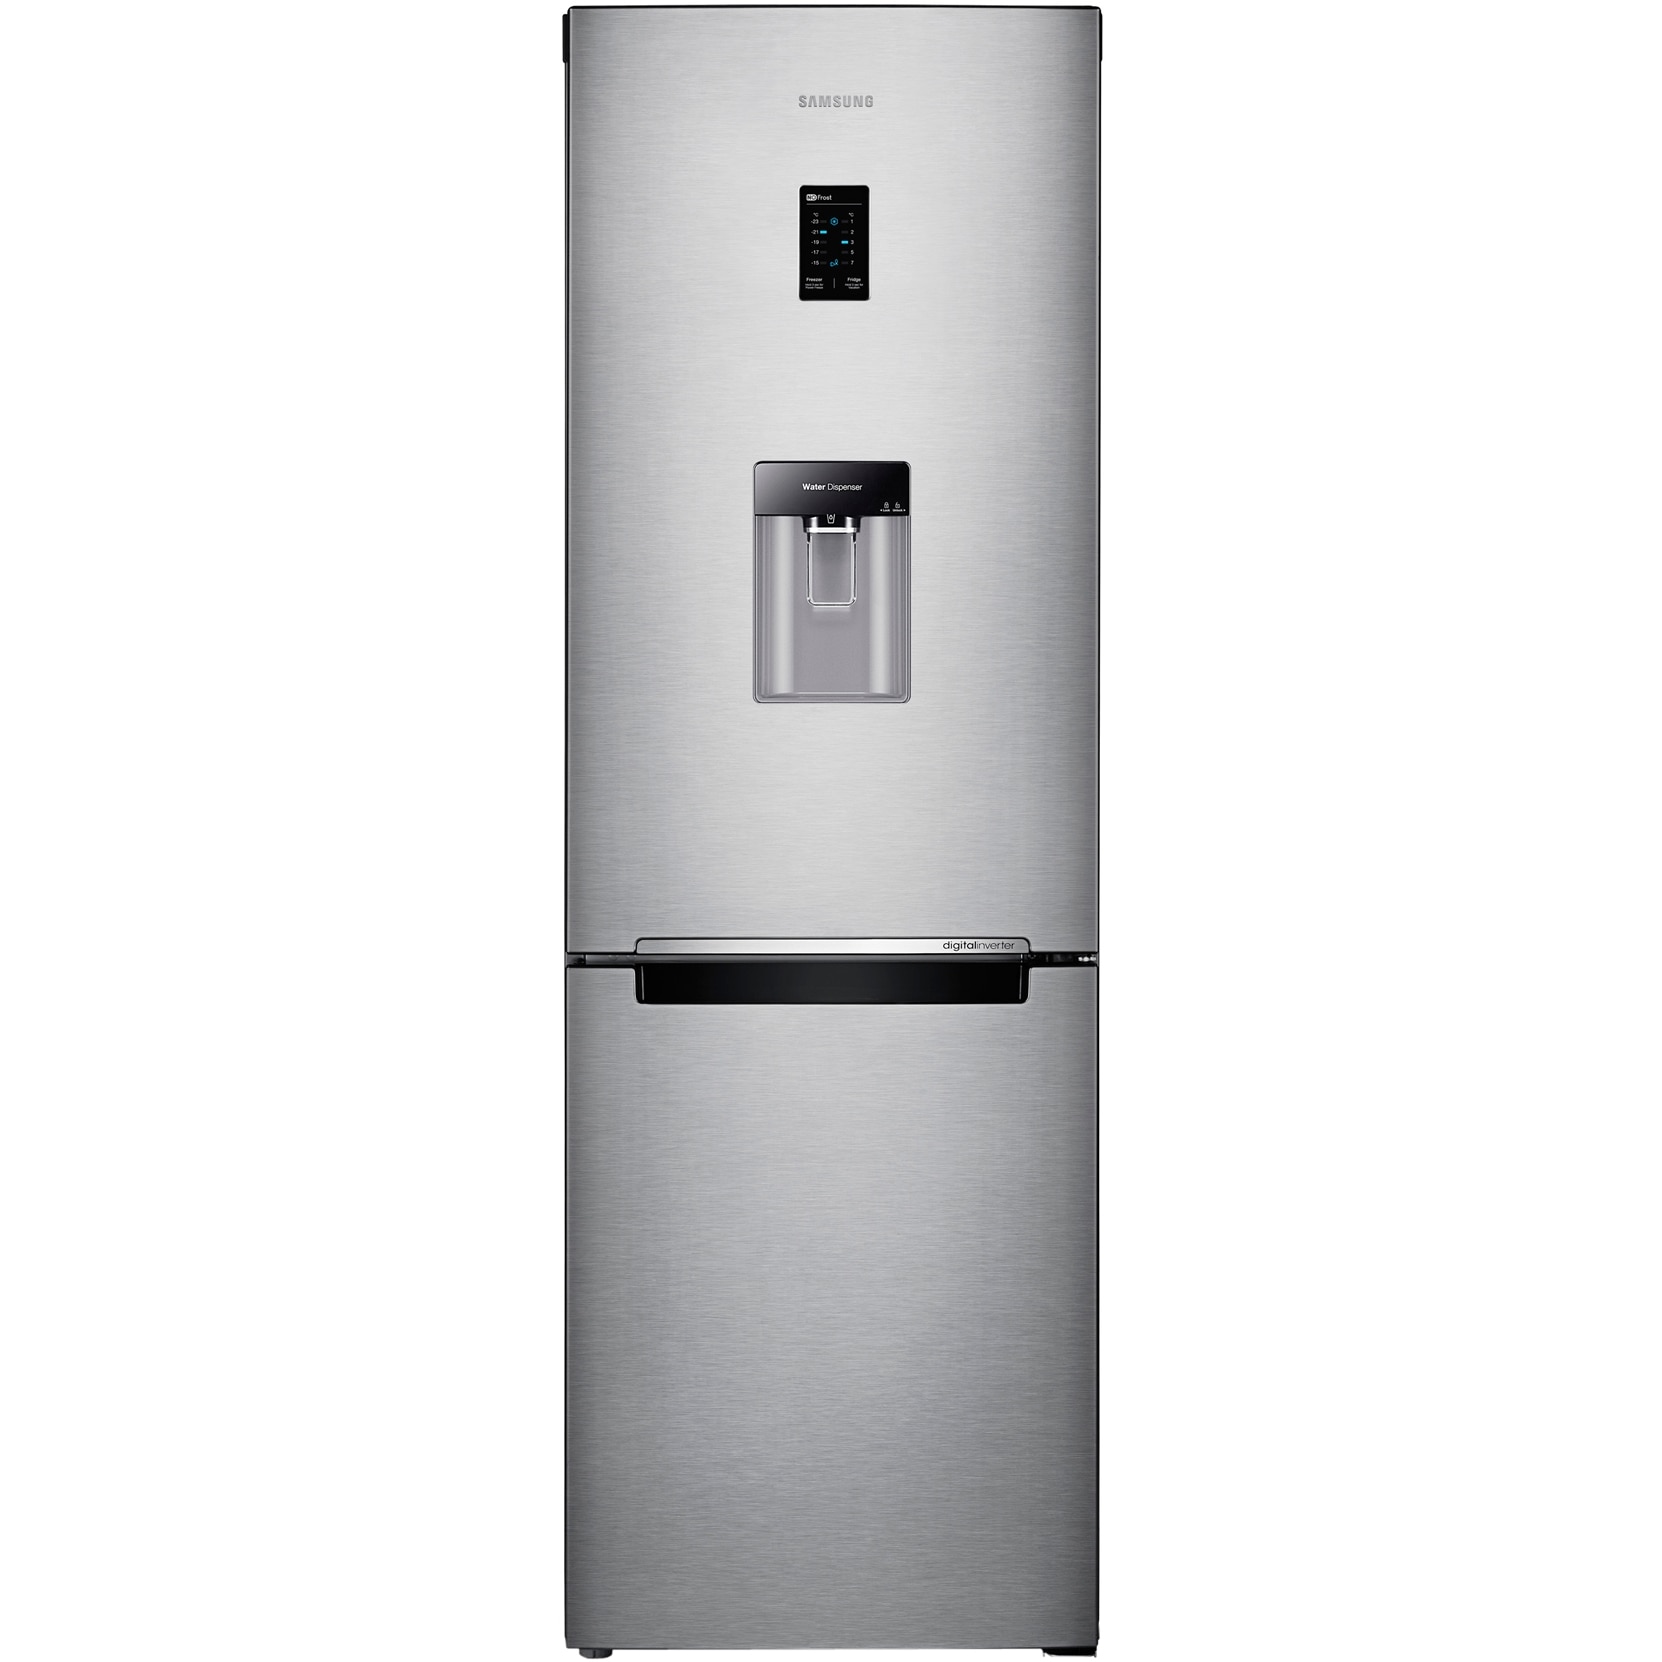 Хладилник Samsung RB31FDRNDSA с обем от 308 л.